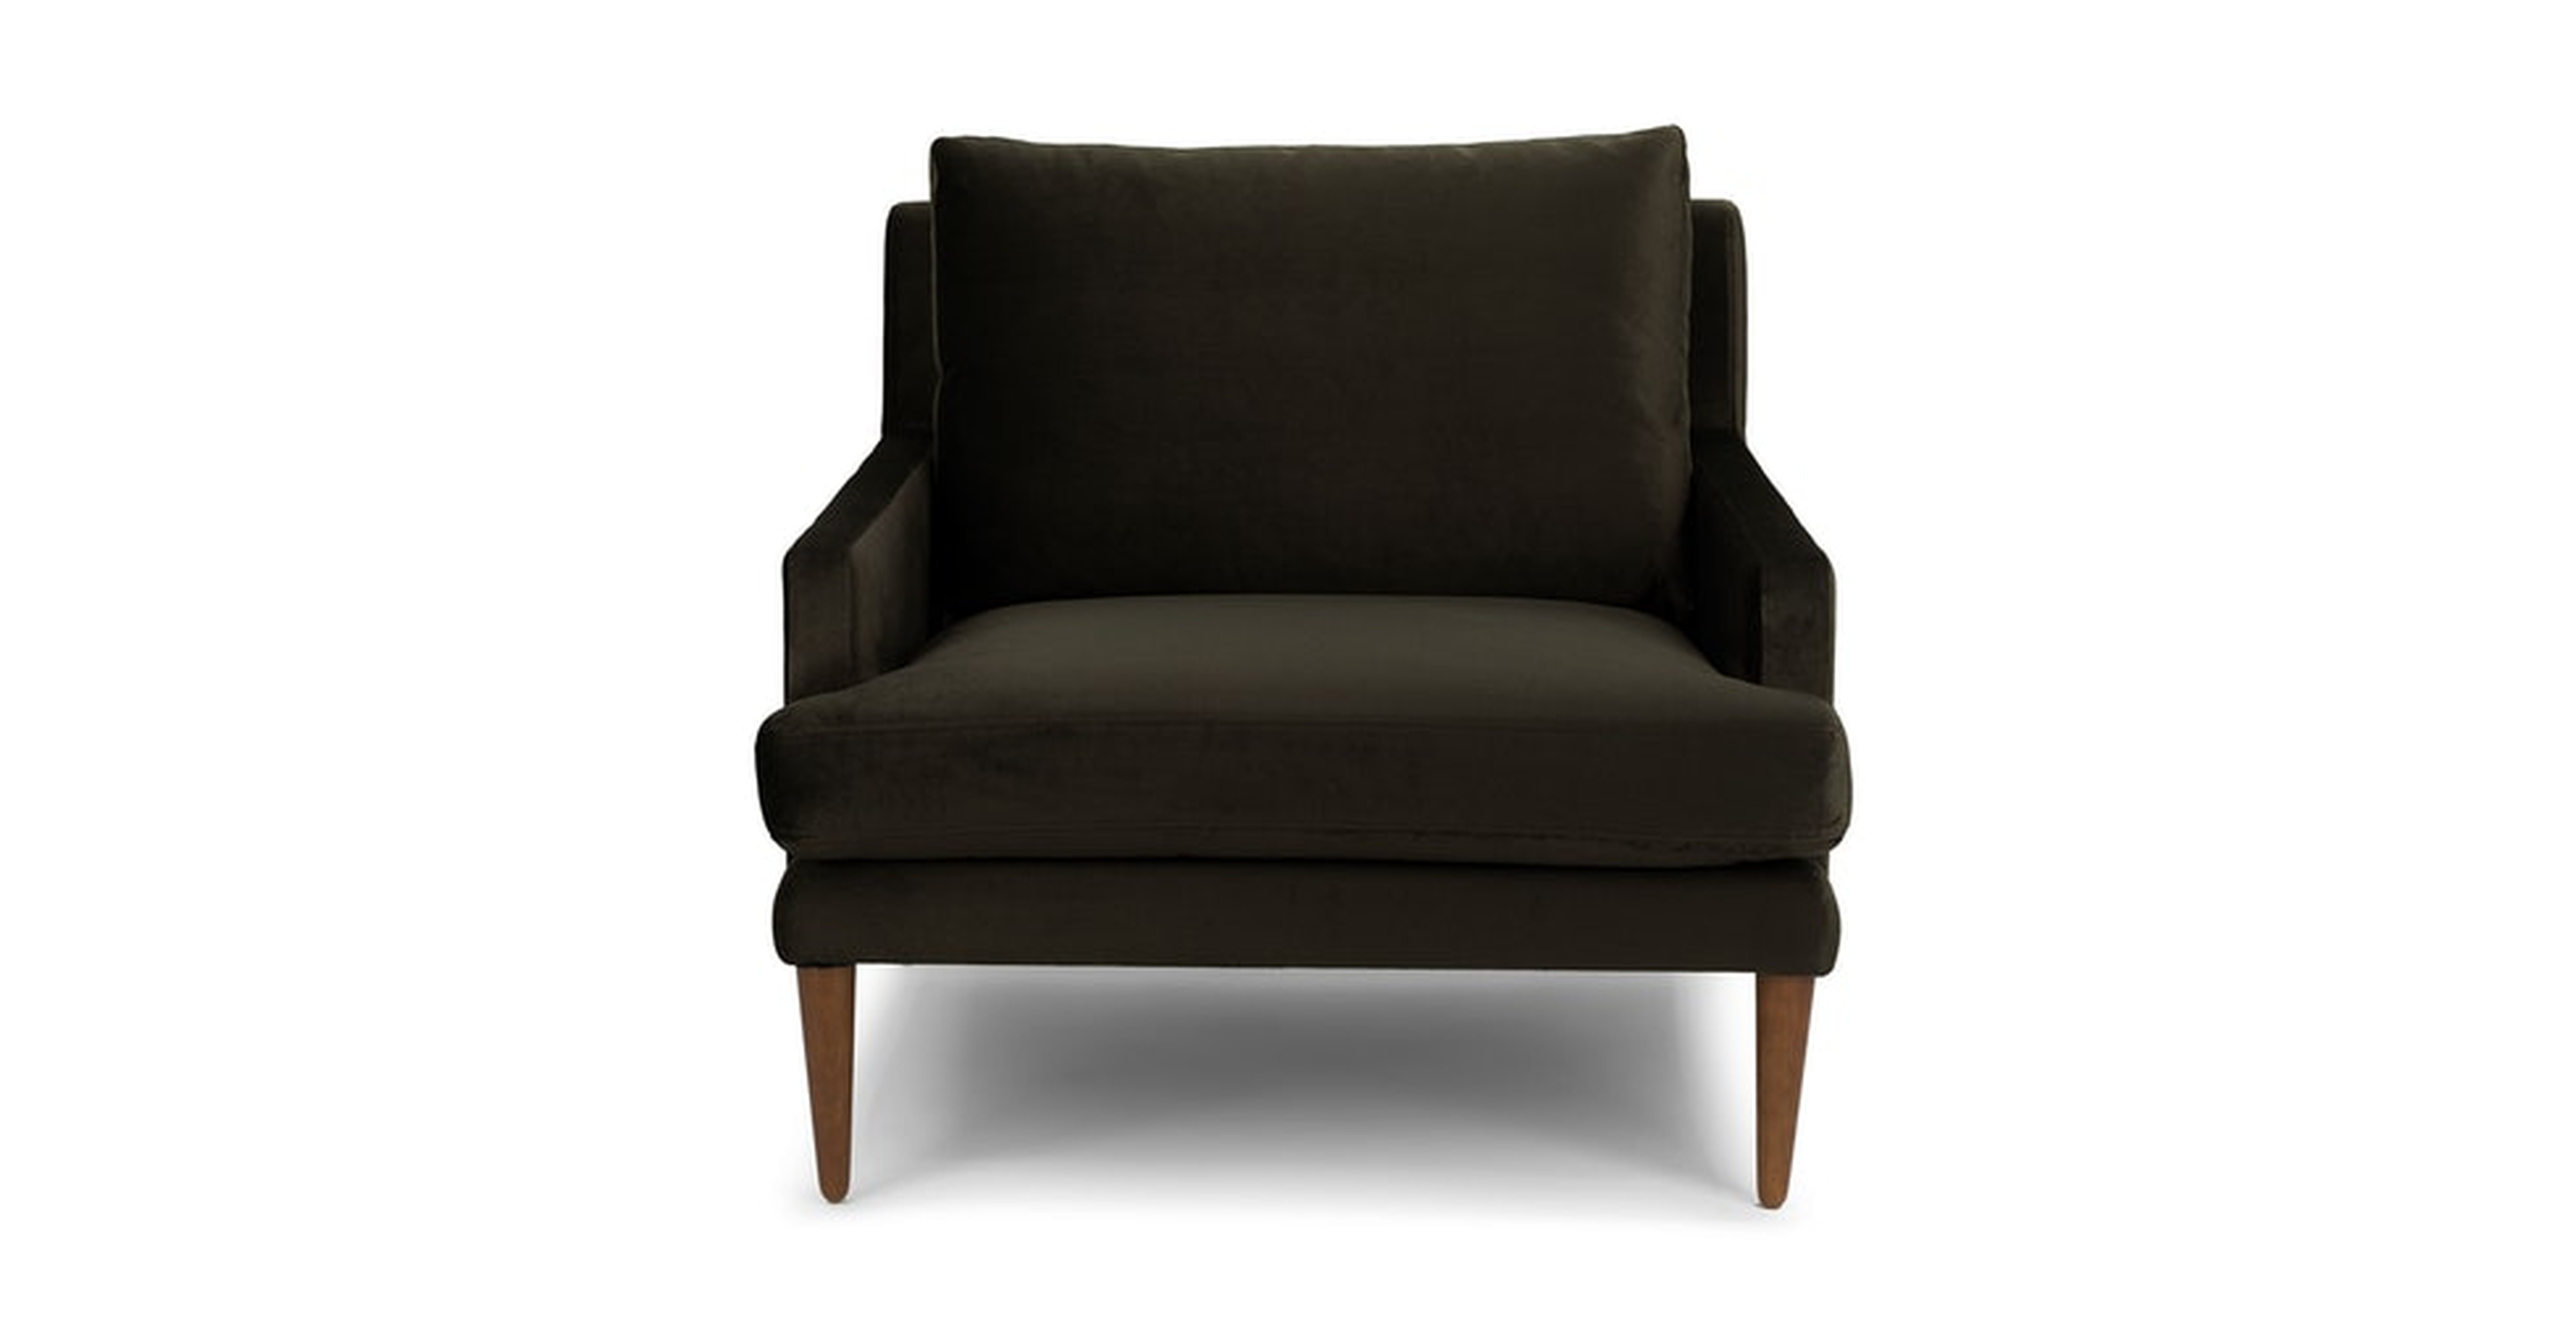 Luxu Cedar Green Chair - Article